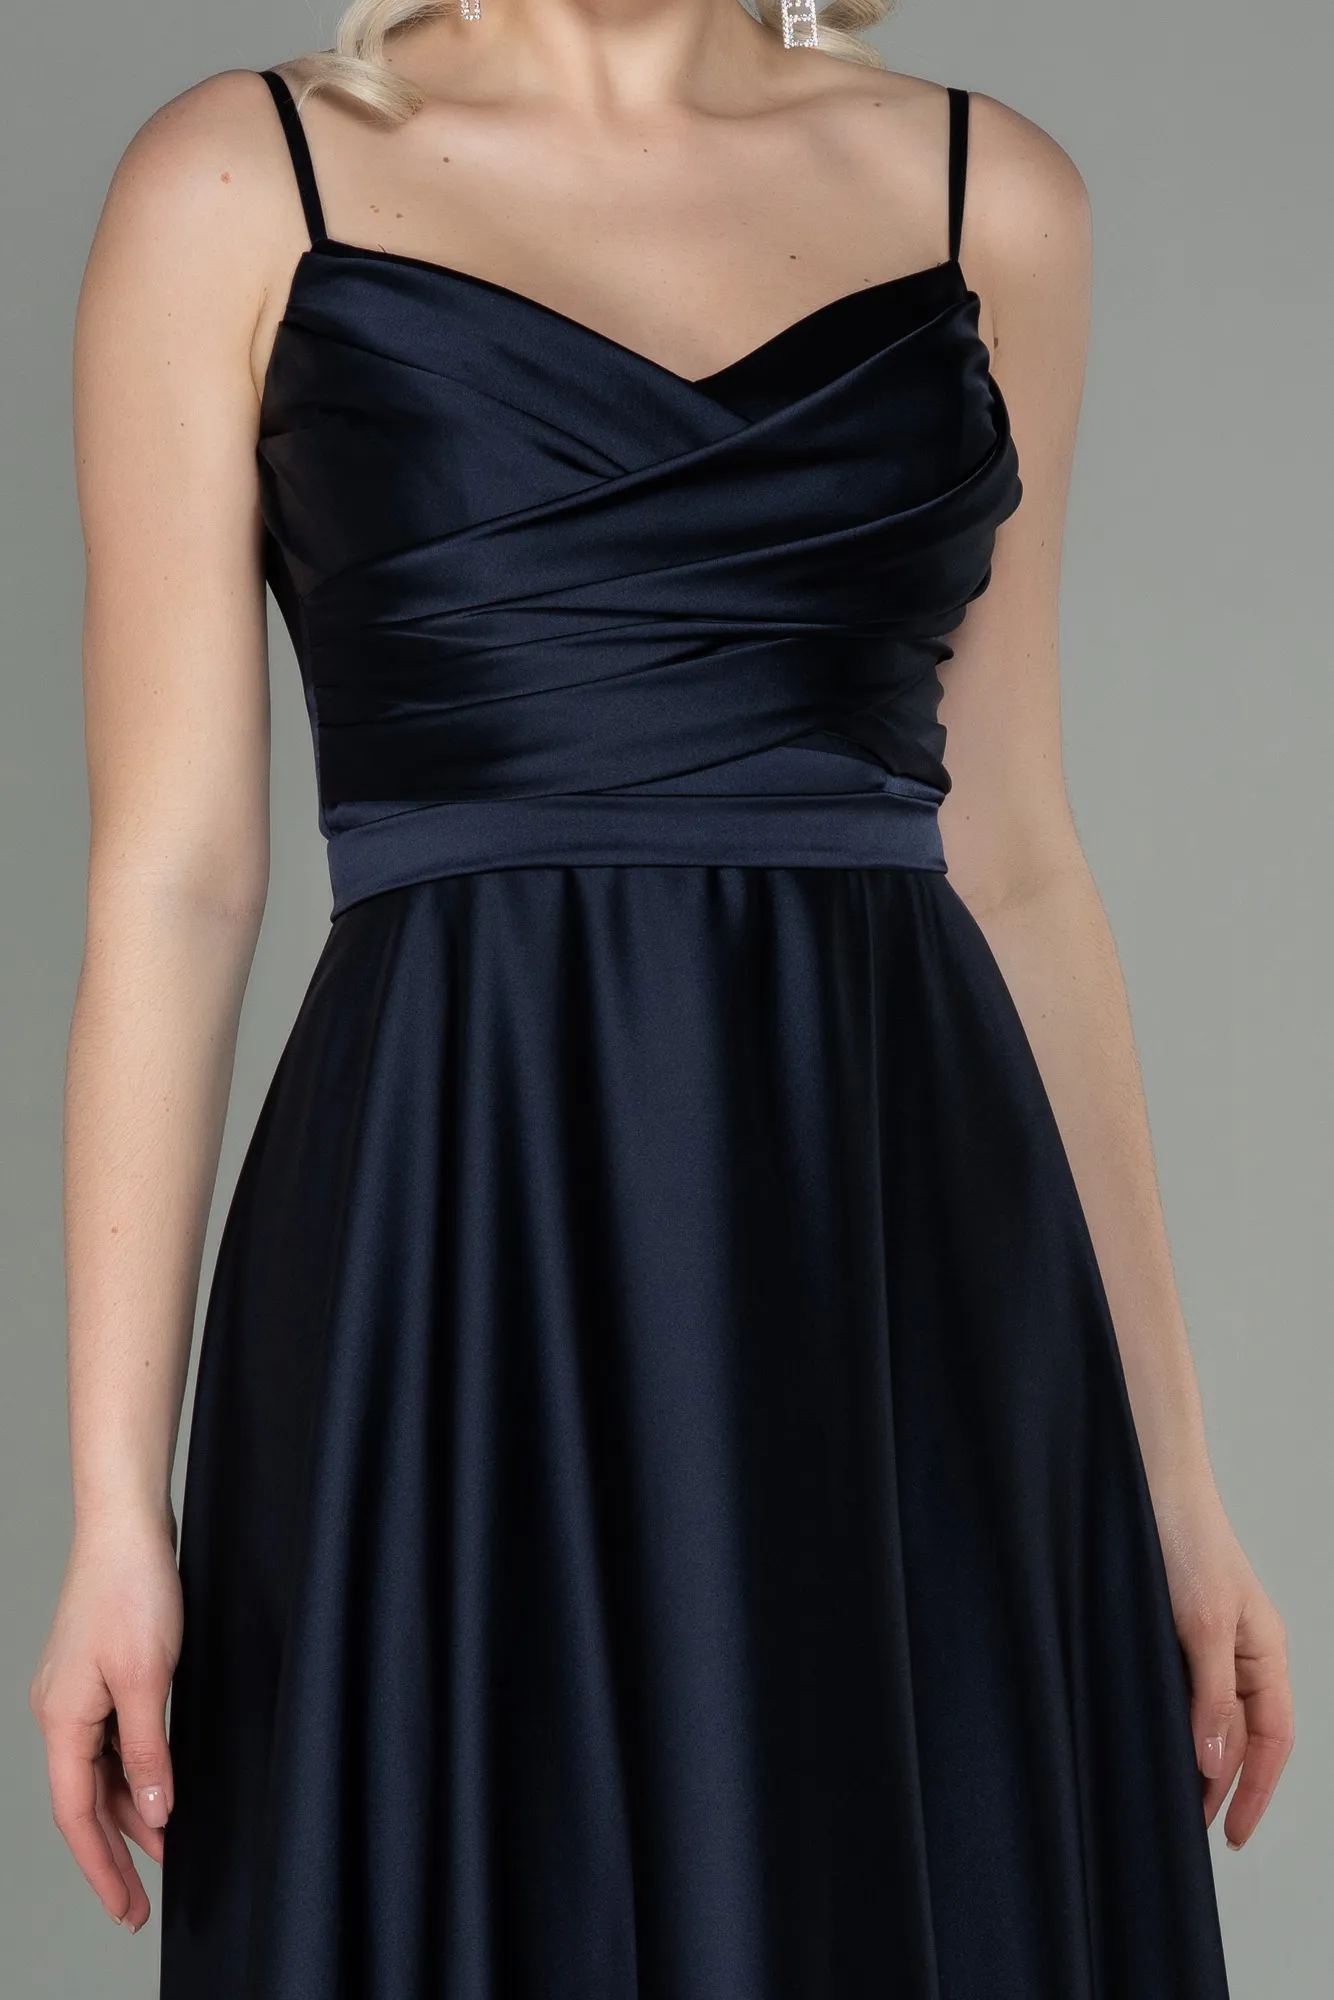 Dark Navy Blue-Long Satin Evening Dress ABU1601